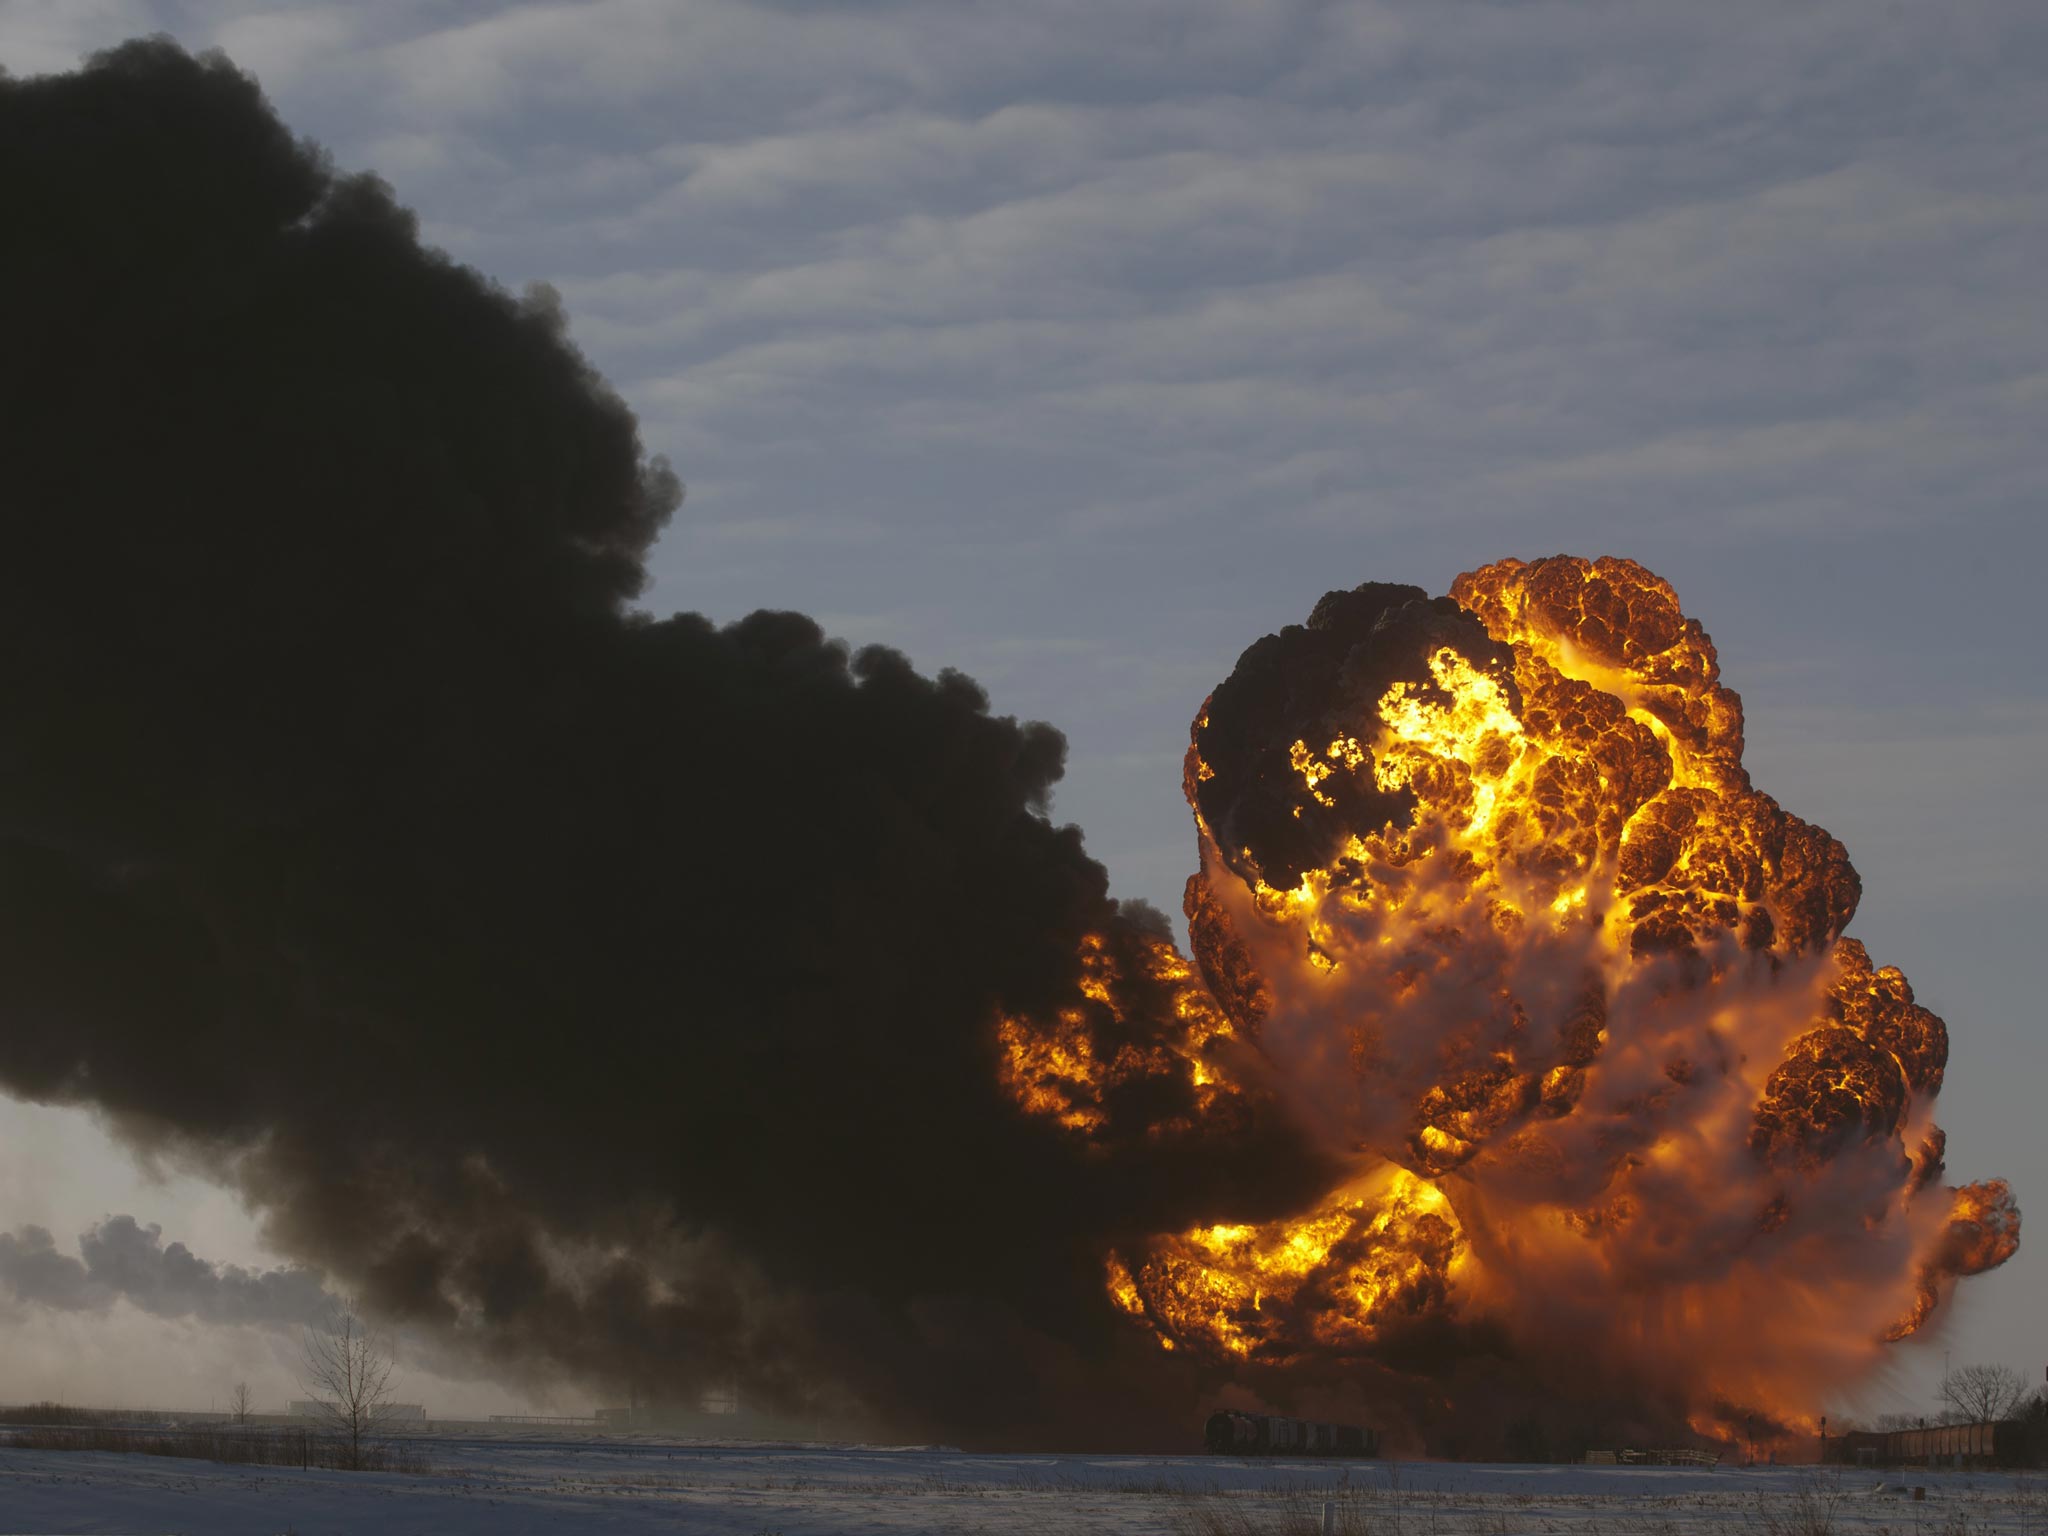 A fireball goes up at the site of an oil train derailment Monday, Dec 30, 2013, in Casselton, North Dakota